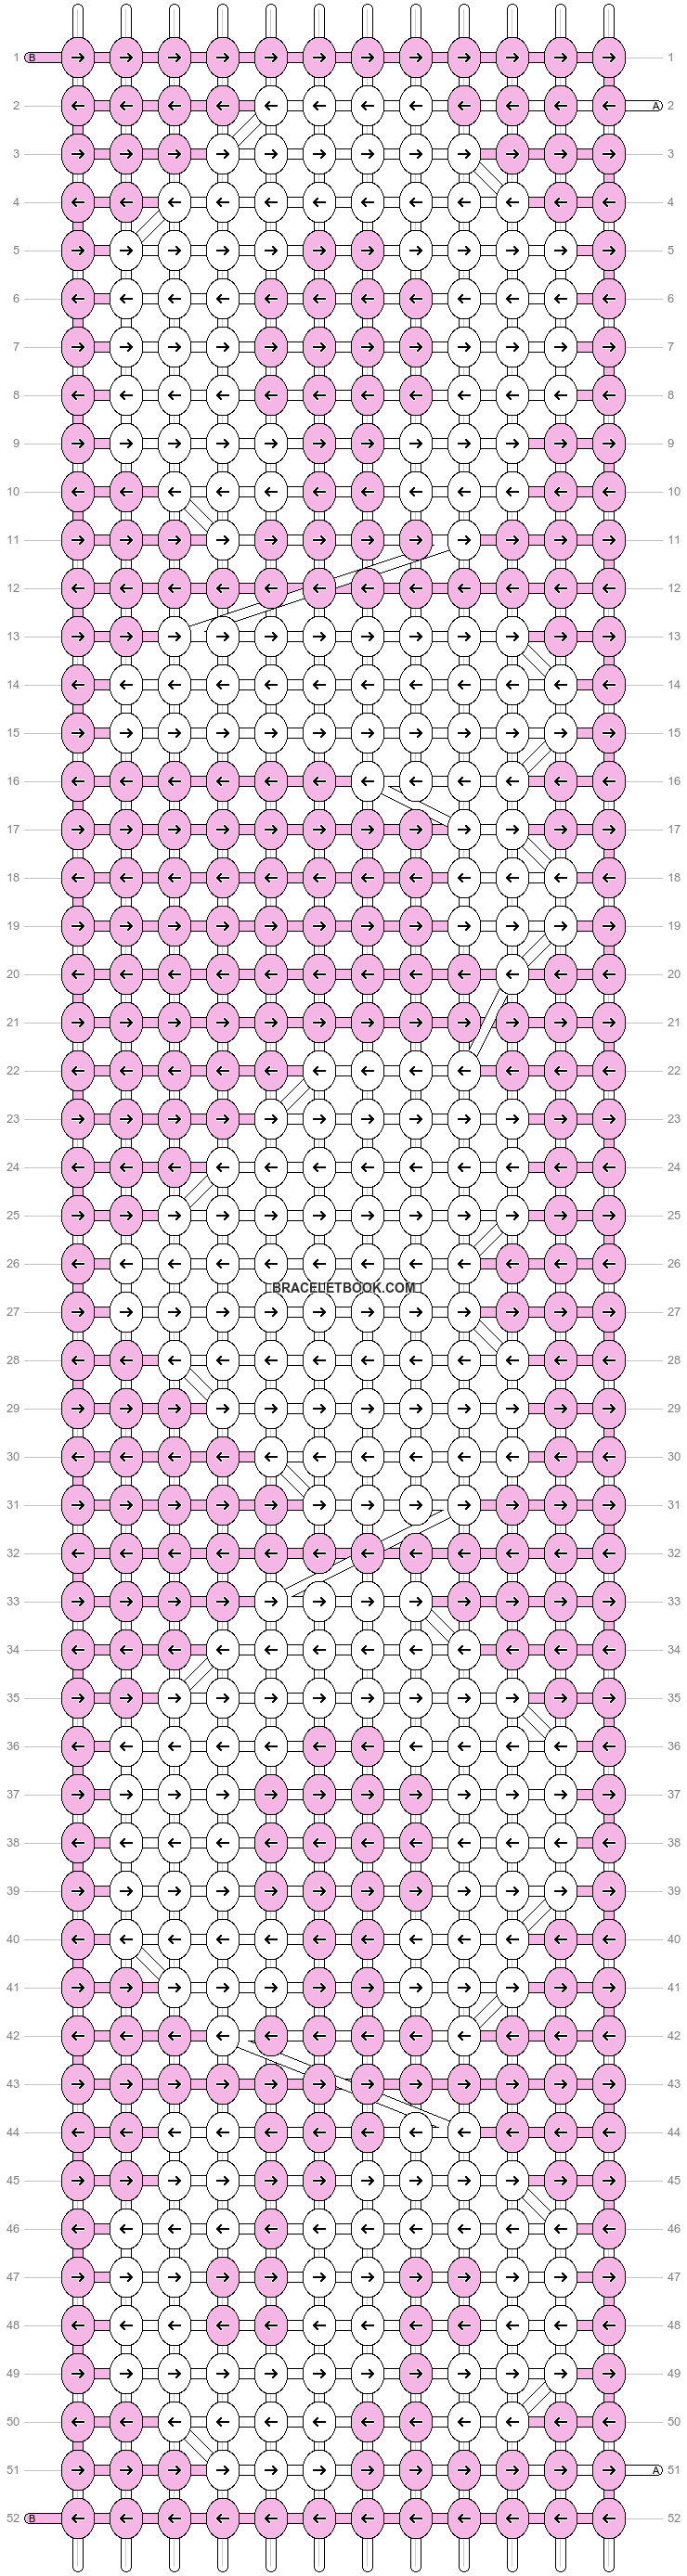 Alpha pattern #64183 variation #118262 pattern